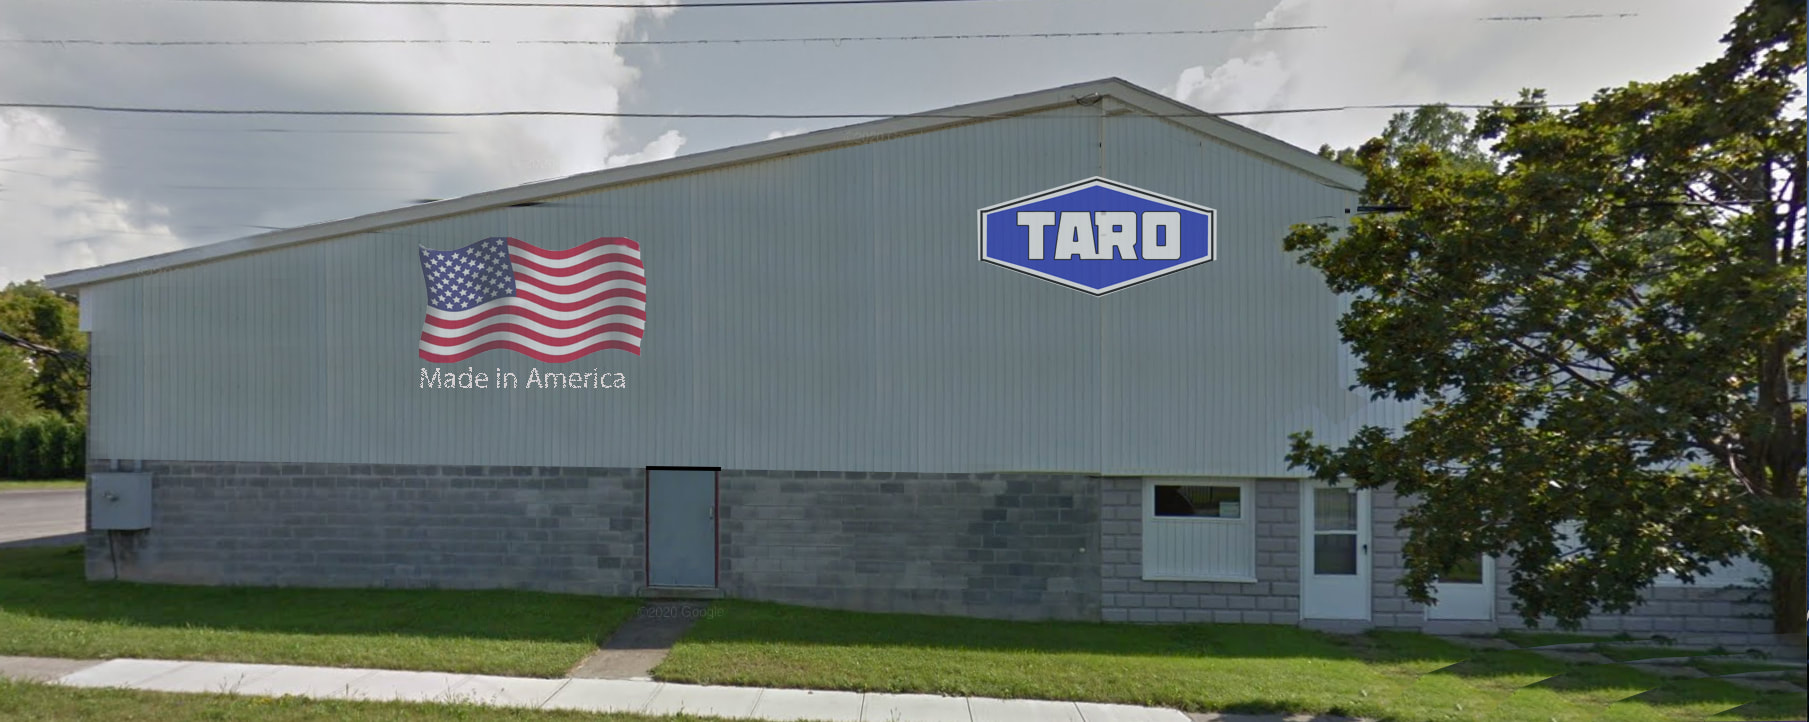 Taro - A made in America plastic manufacturing company, Auburn NY